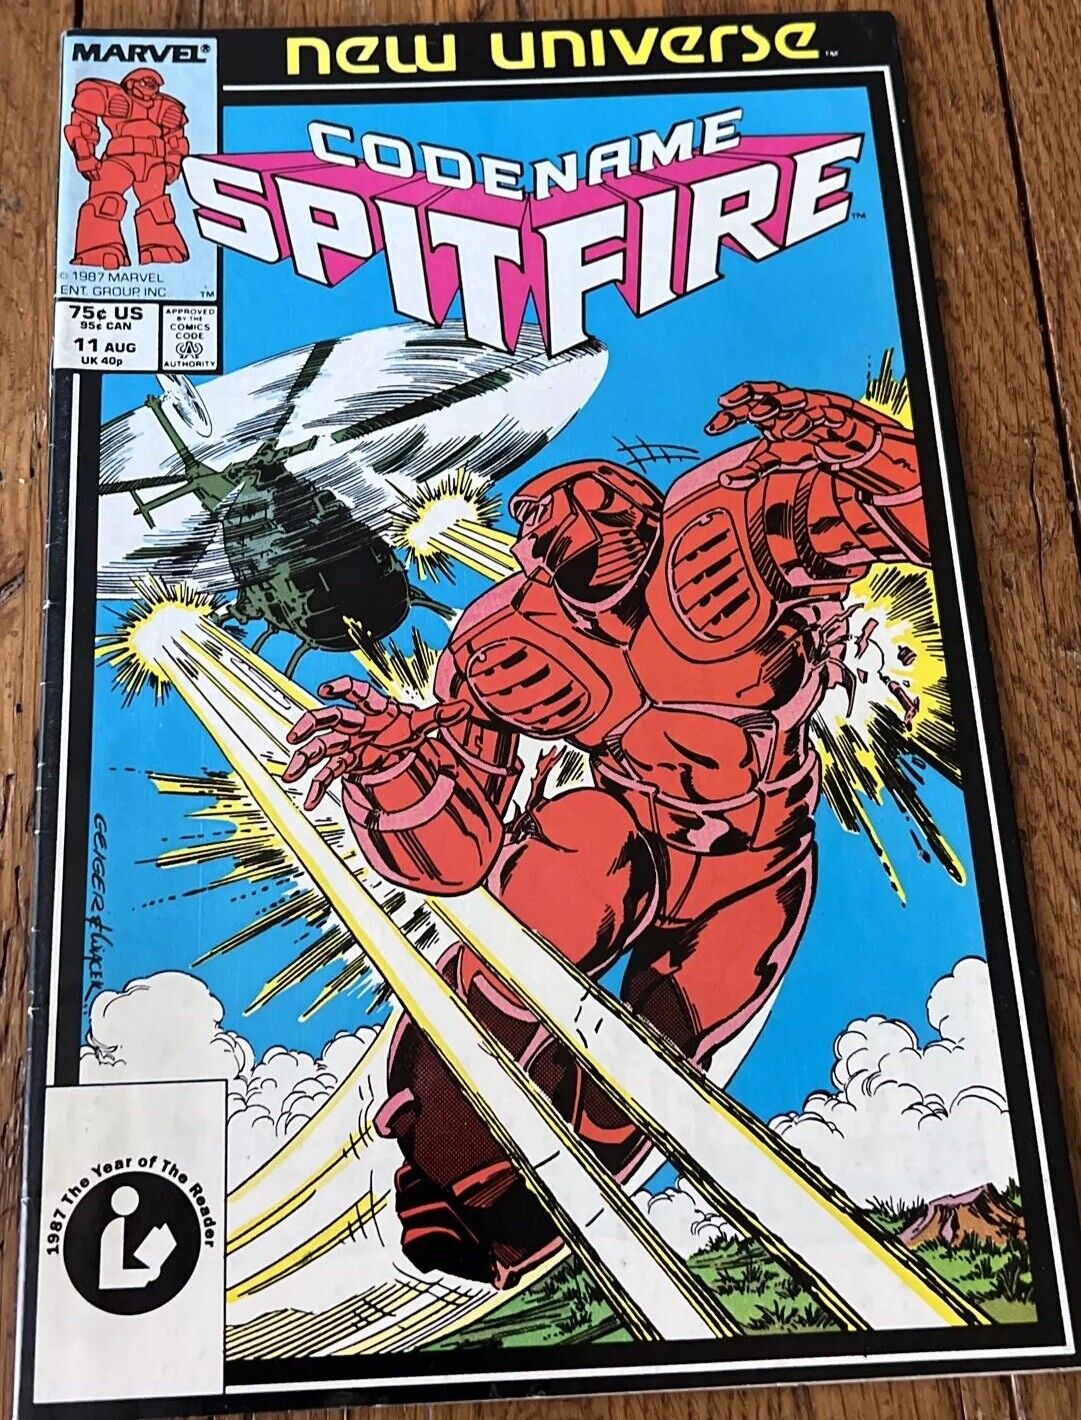 Codename: Spitfire #11 Marvel Comics August Aug 1987 